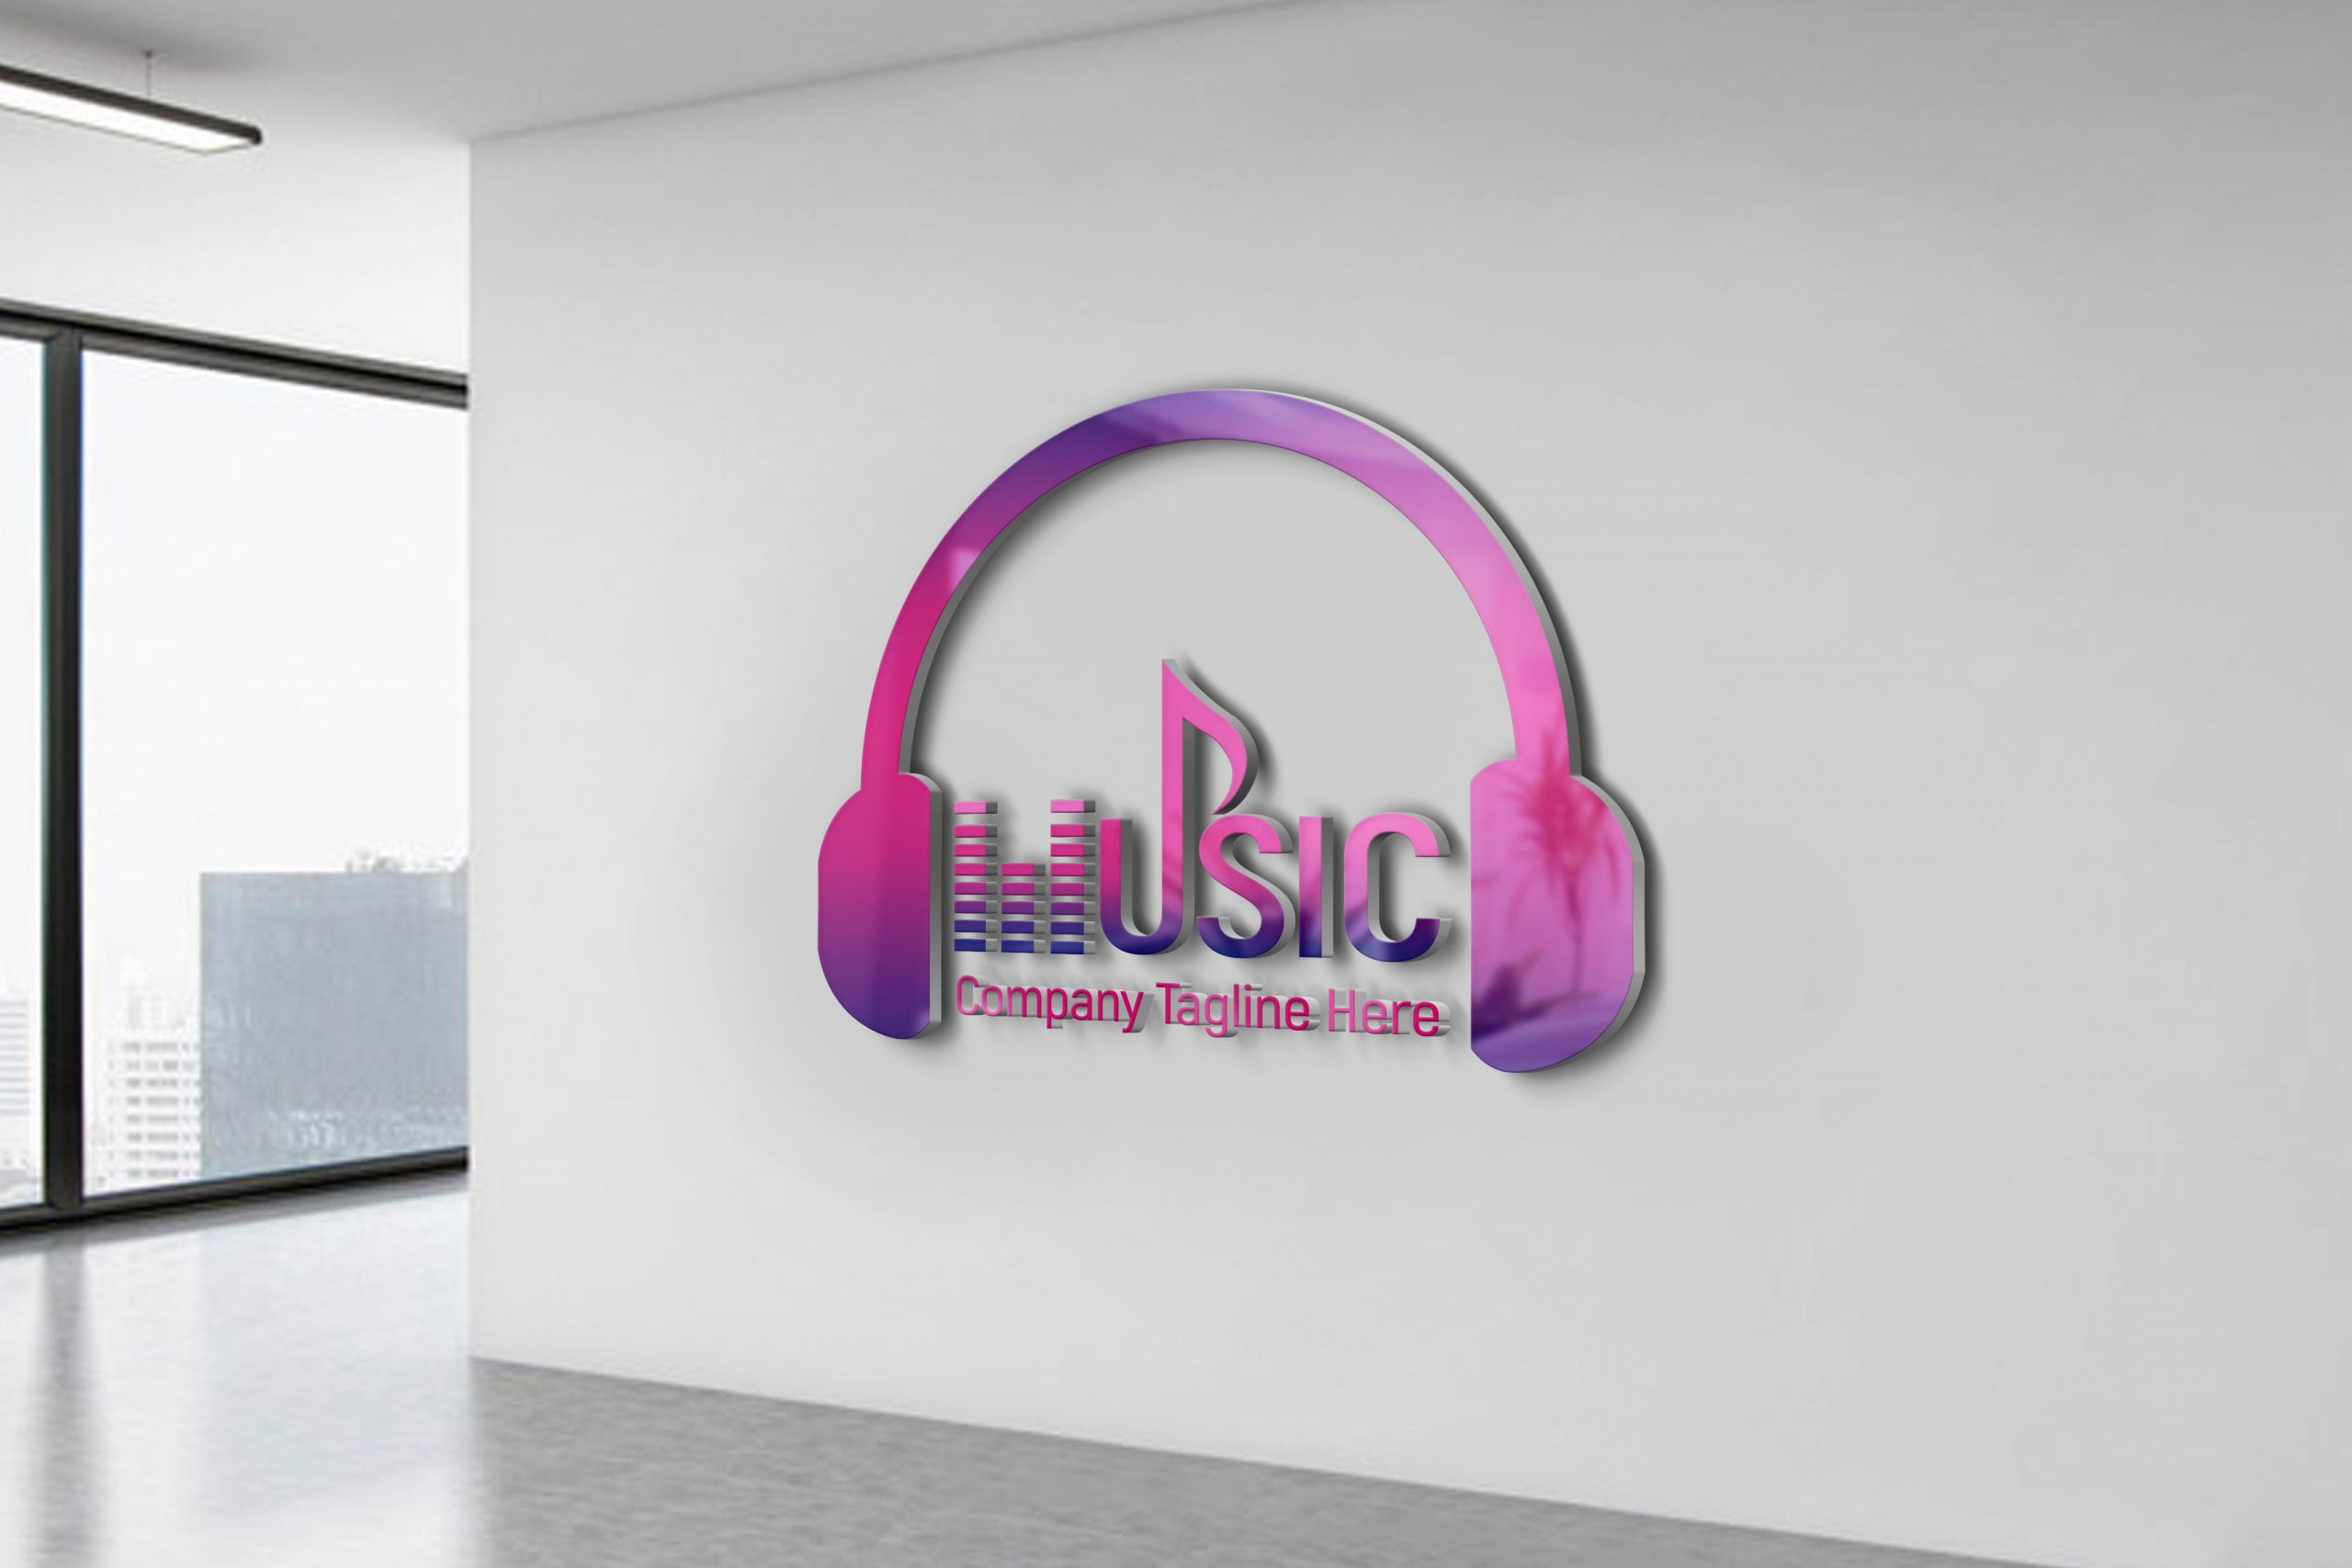 Free music logo design on white wall